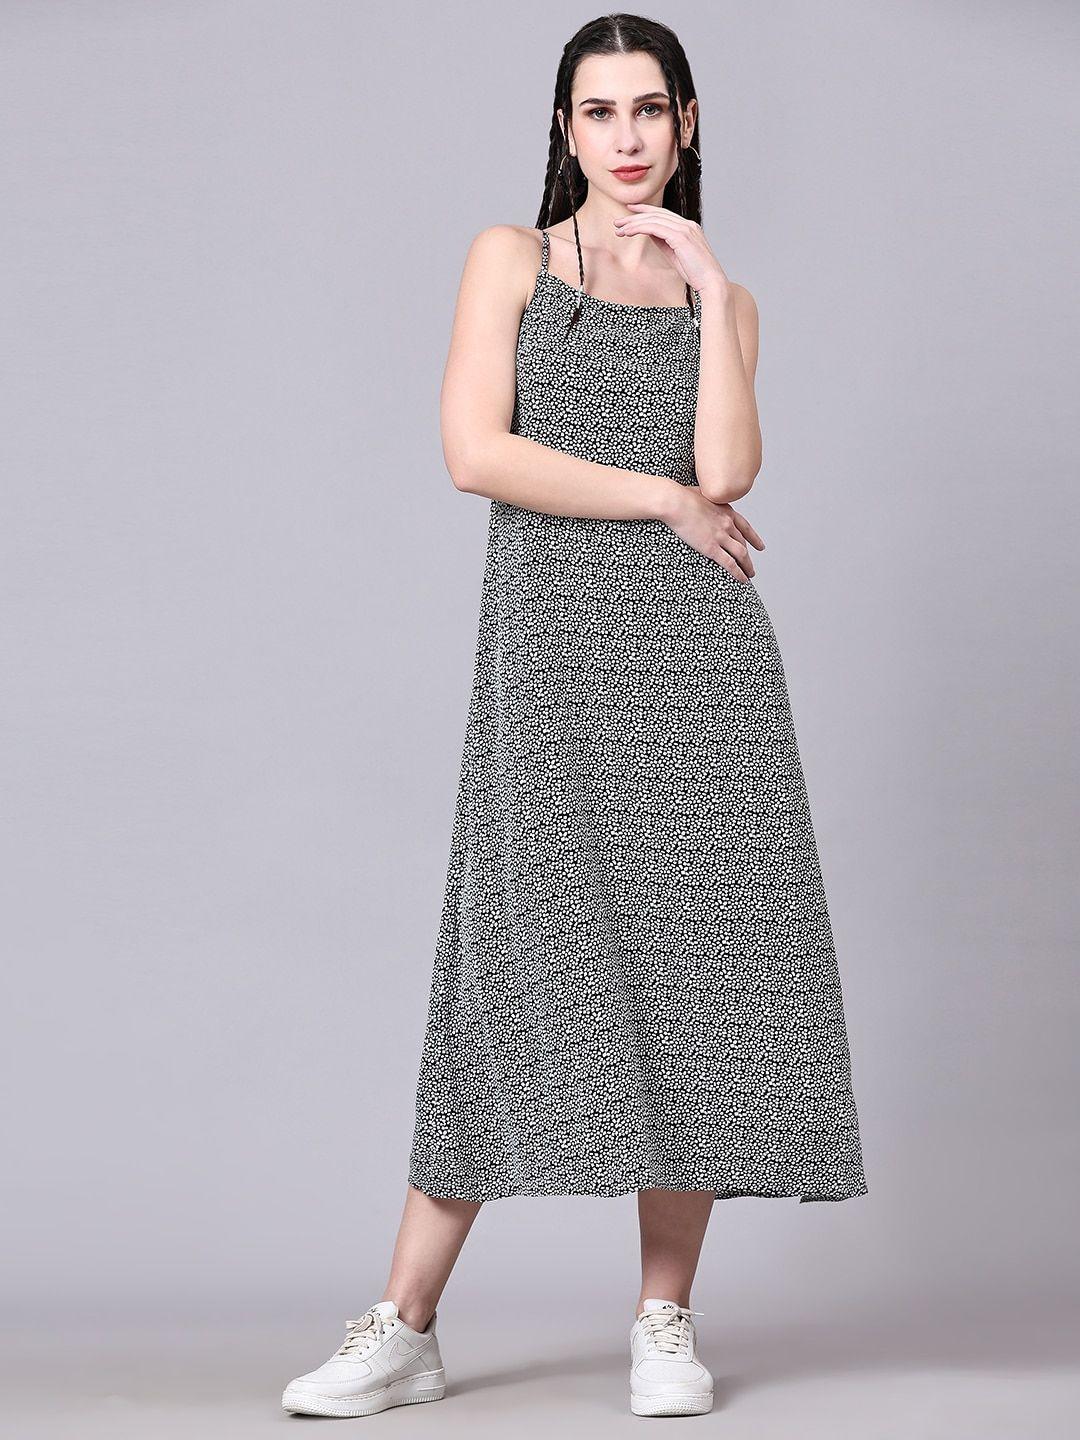 pomegal geometric printed shoulder straps lace-up fit & flare midi dress